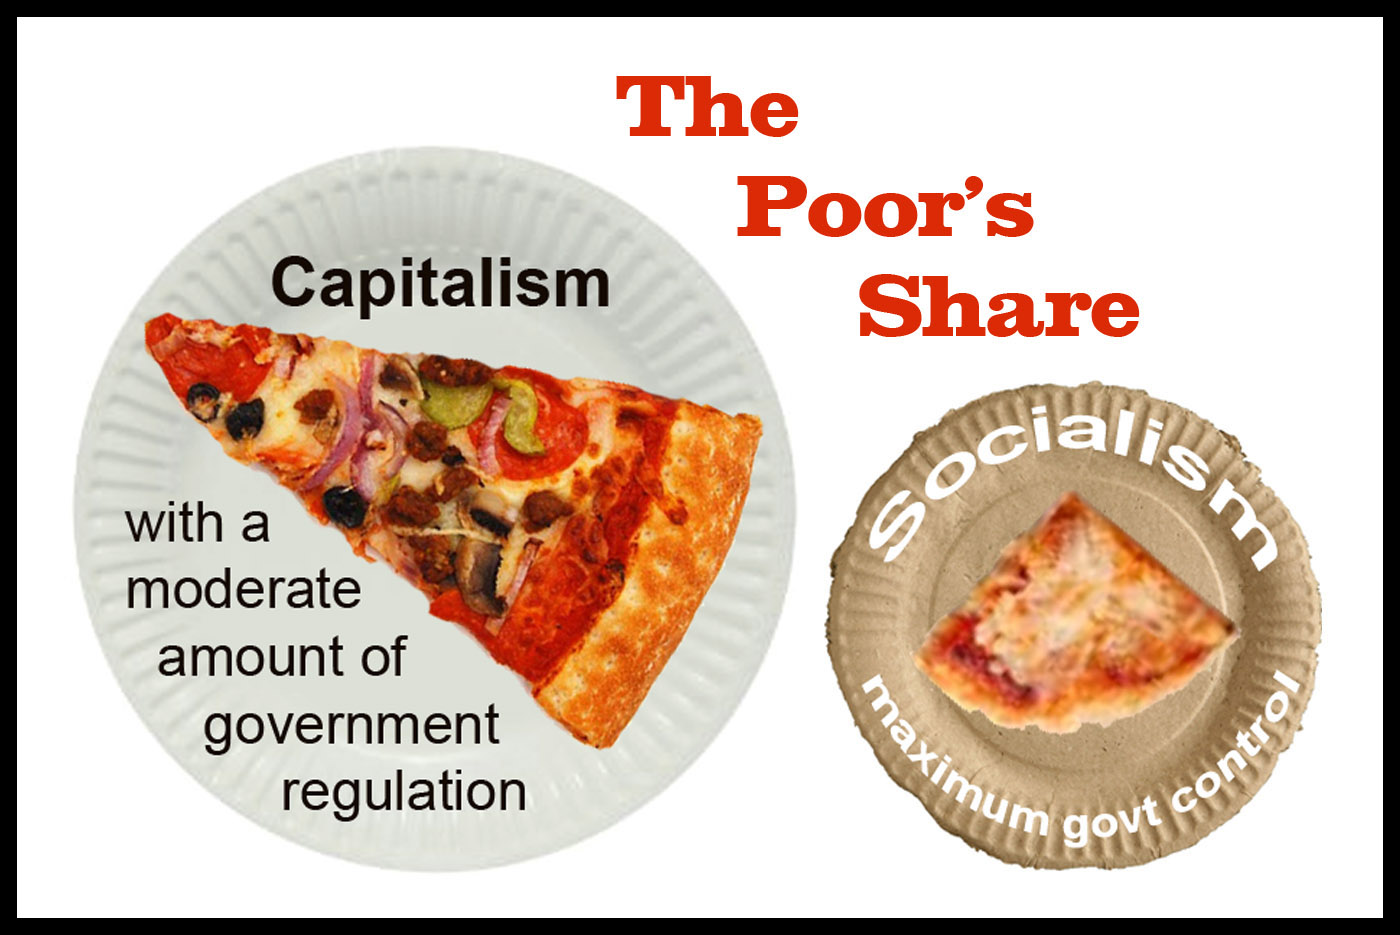 the-poors-share-under-capitalism-vs-socialism.jpg